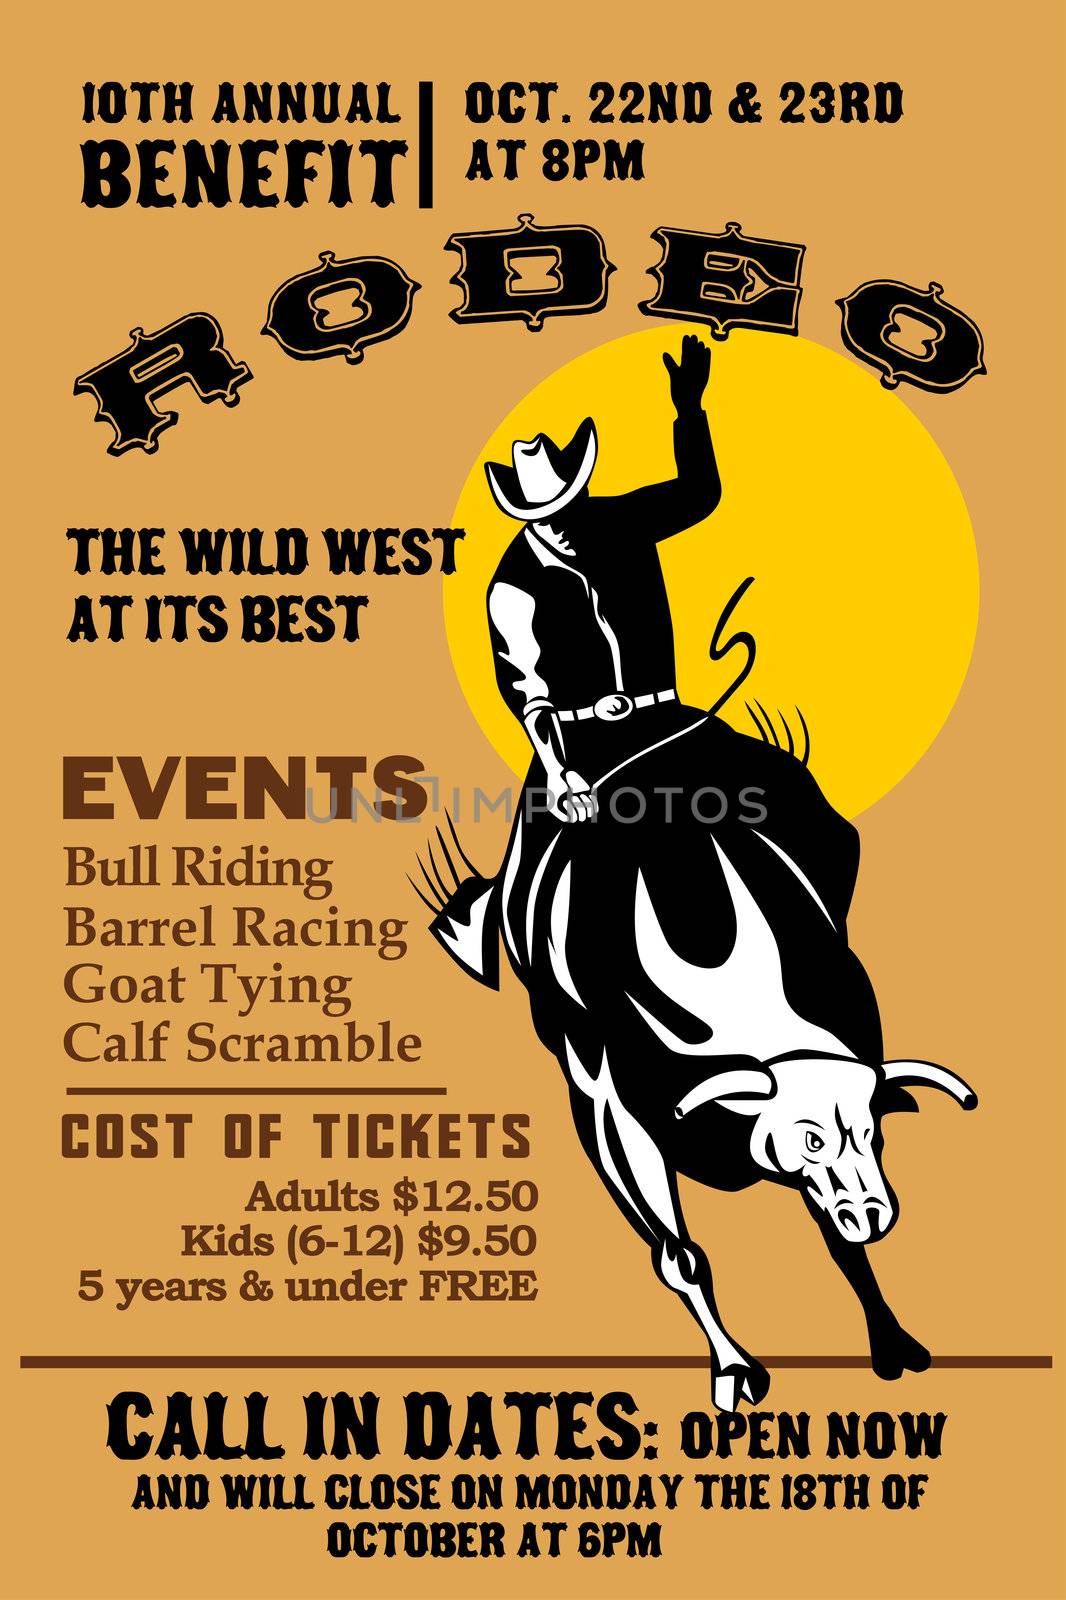 American  Rodeo Cowboy riding bull by patrimonio